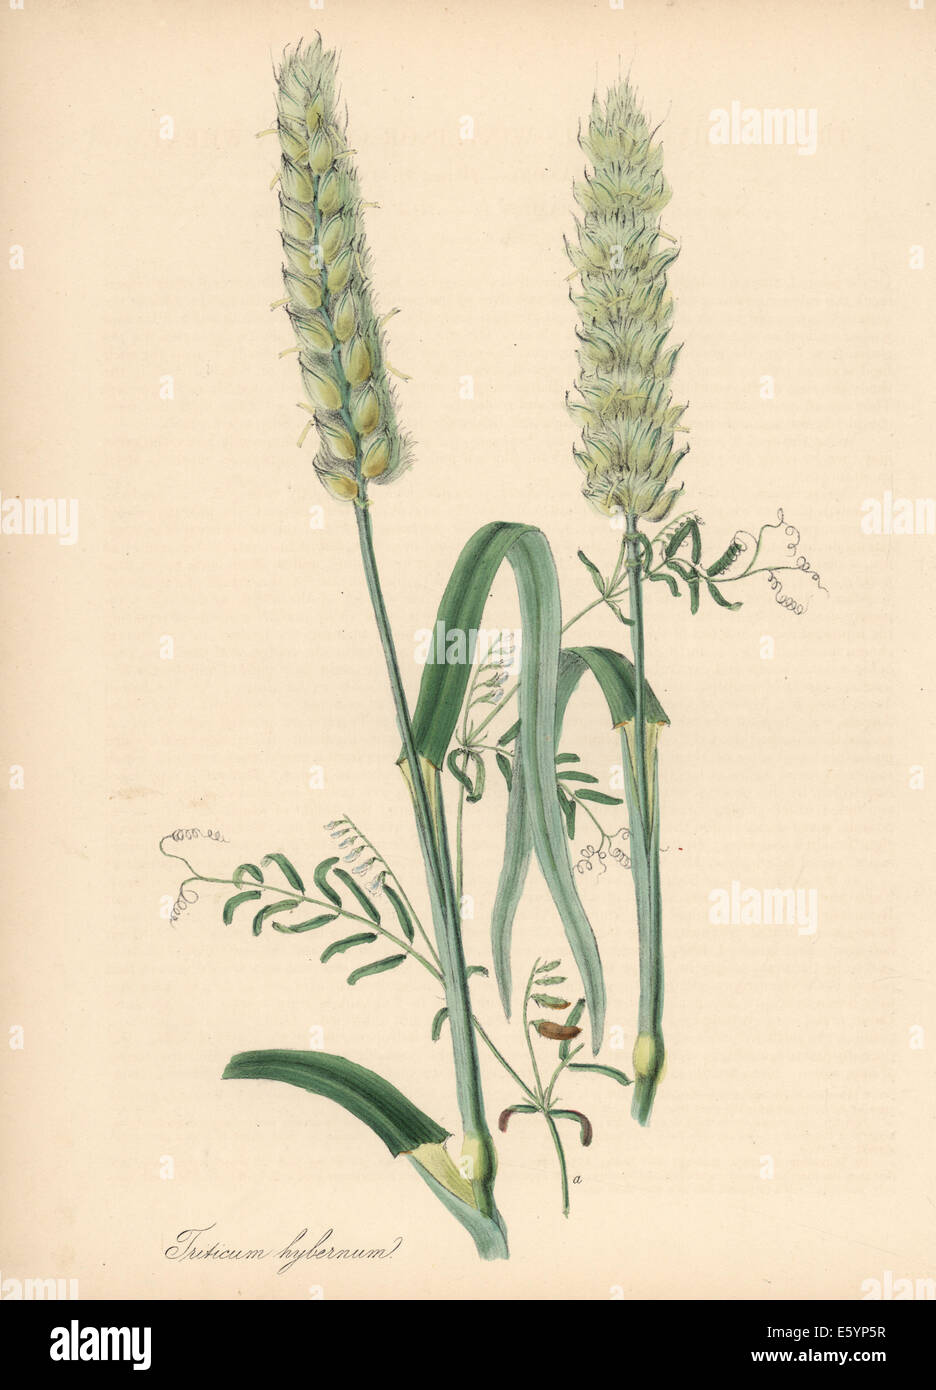 Common wheat, Triticum aestivum. Stock Photo